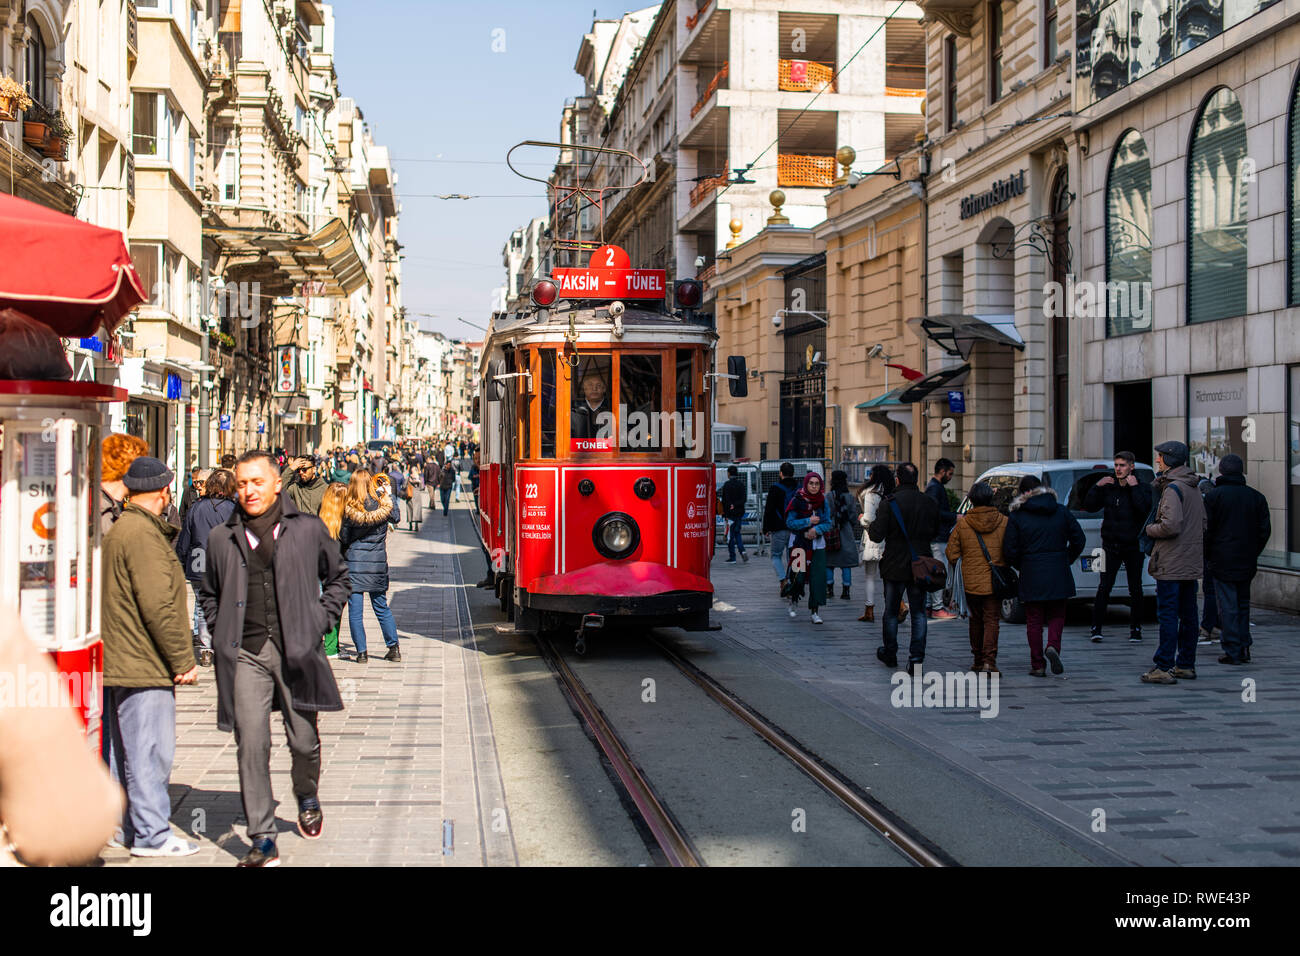 Editorial - La Place Taksim - Tramway Tünel, marque de Beyoglu, la rue Istiklal. Istanbul. 03/2019 Banque D'Images